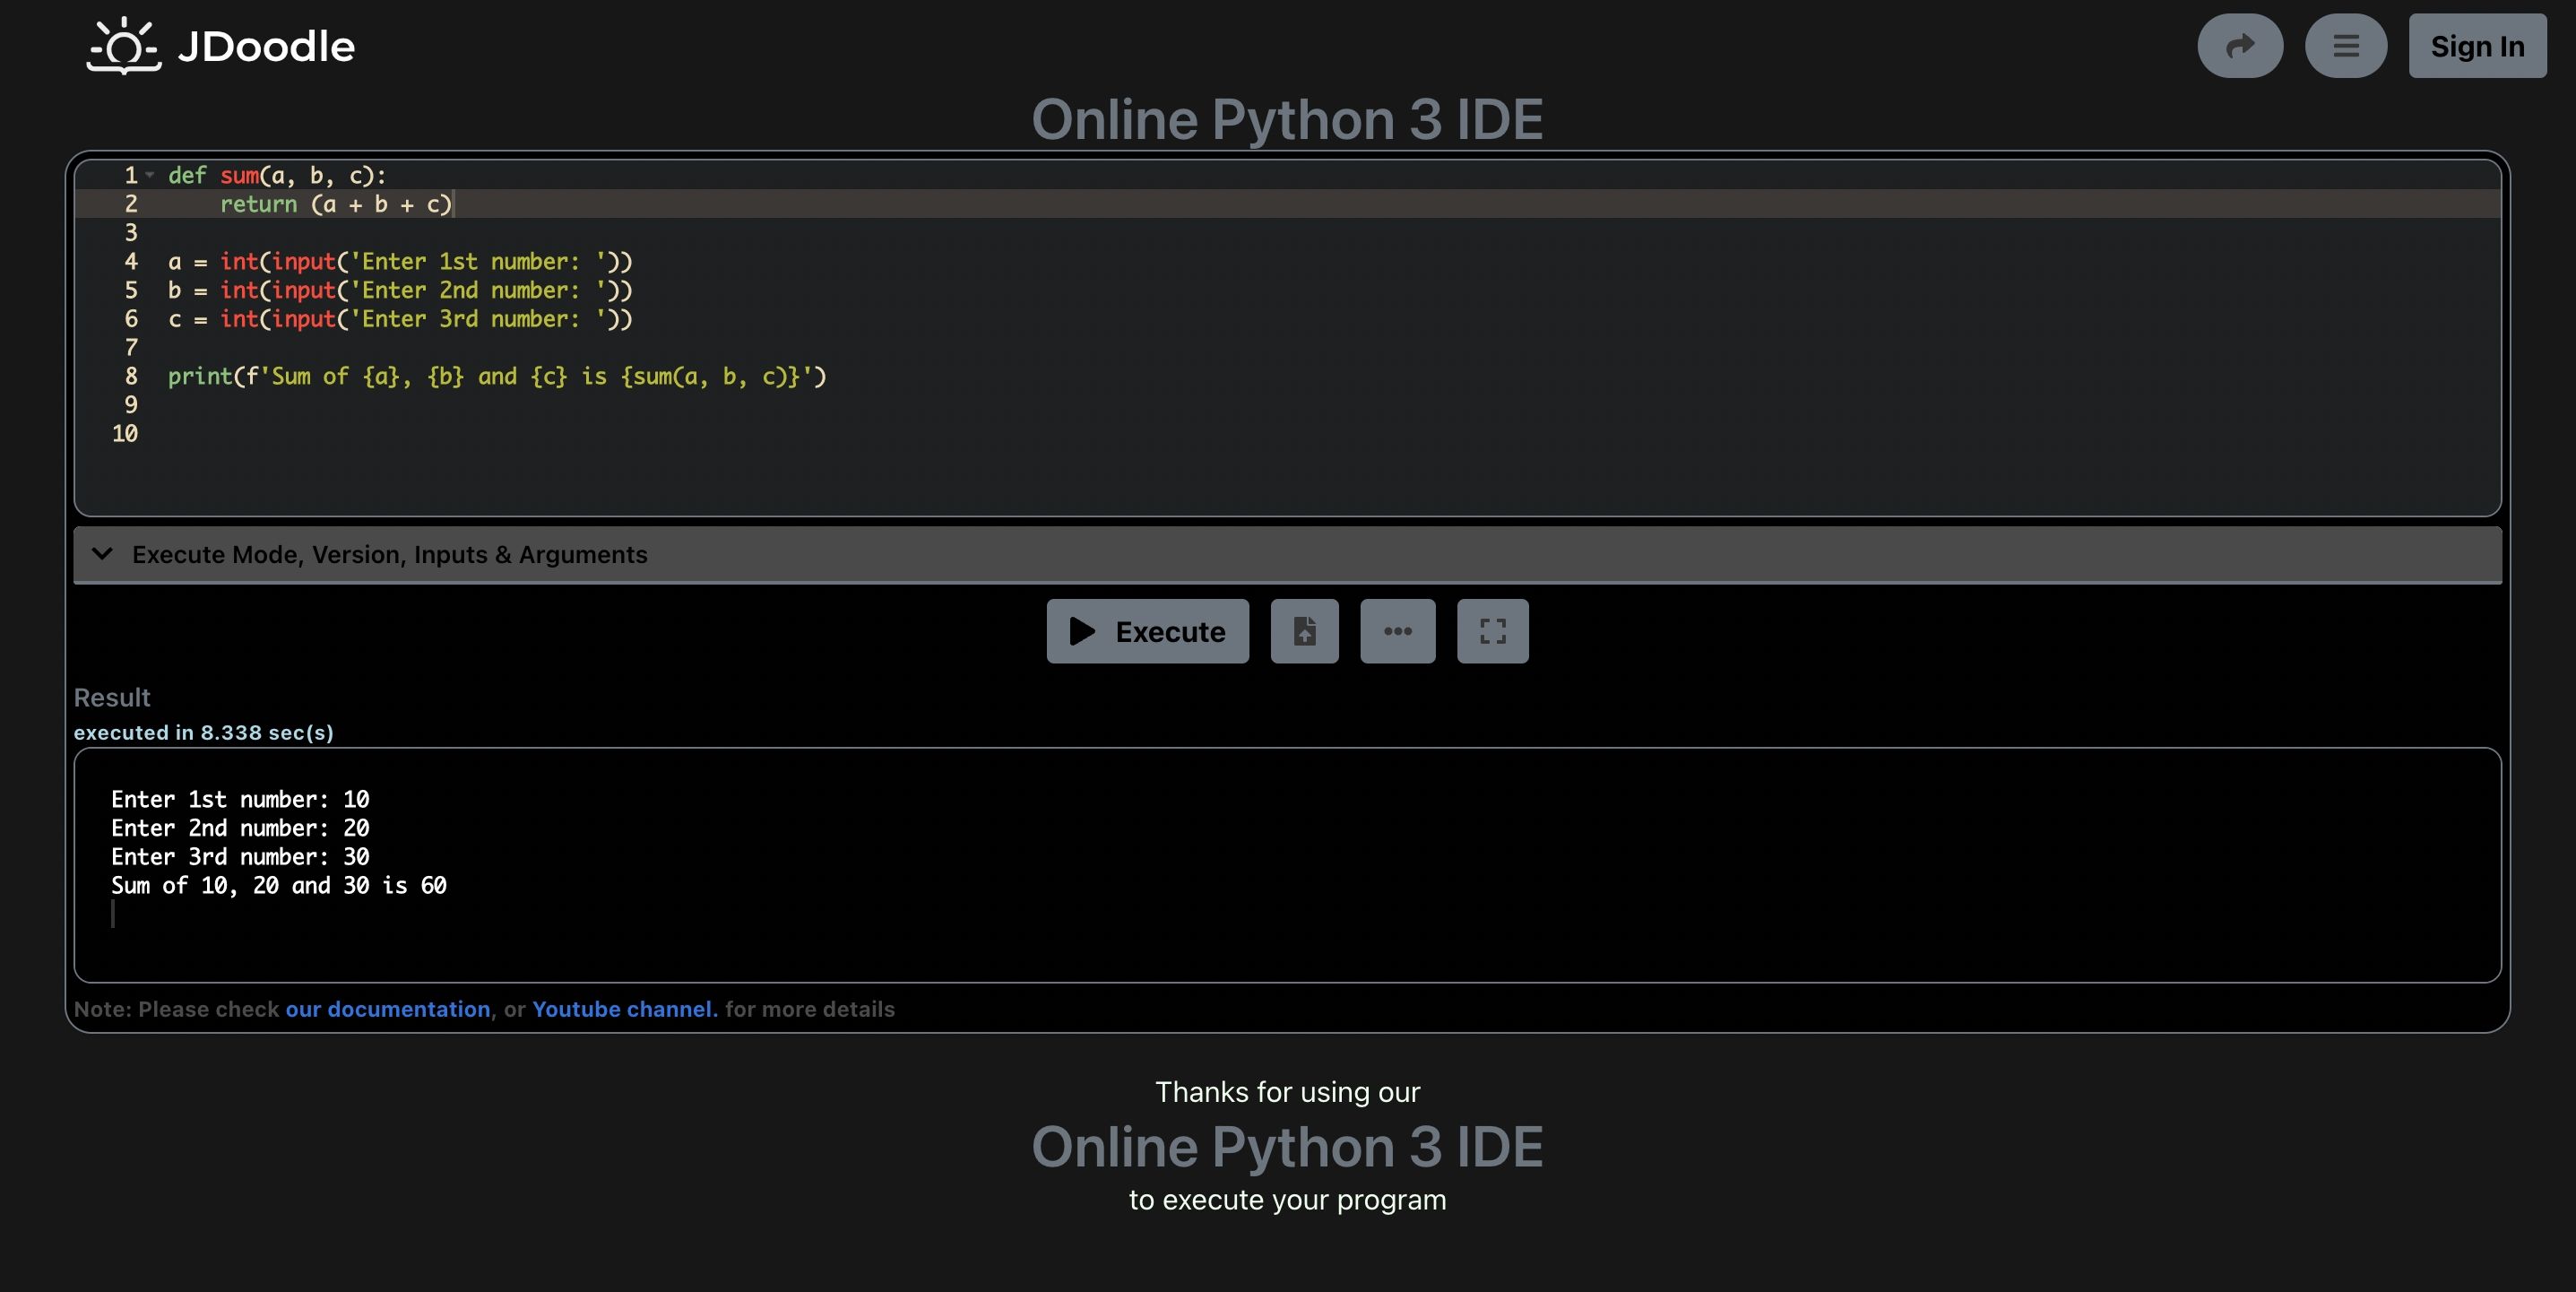 JDoodle's online Python interpreter